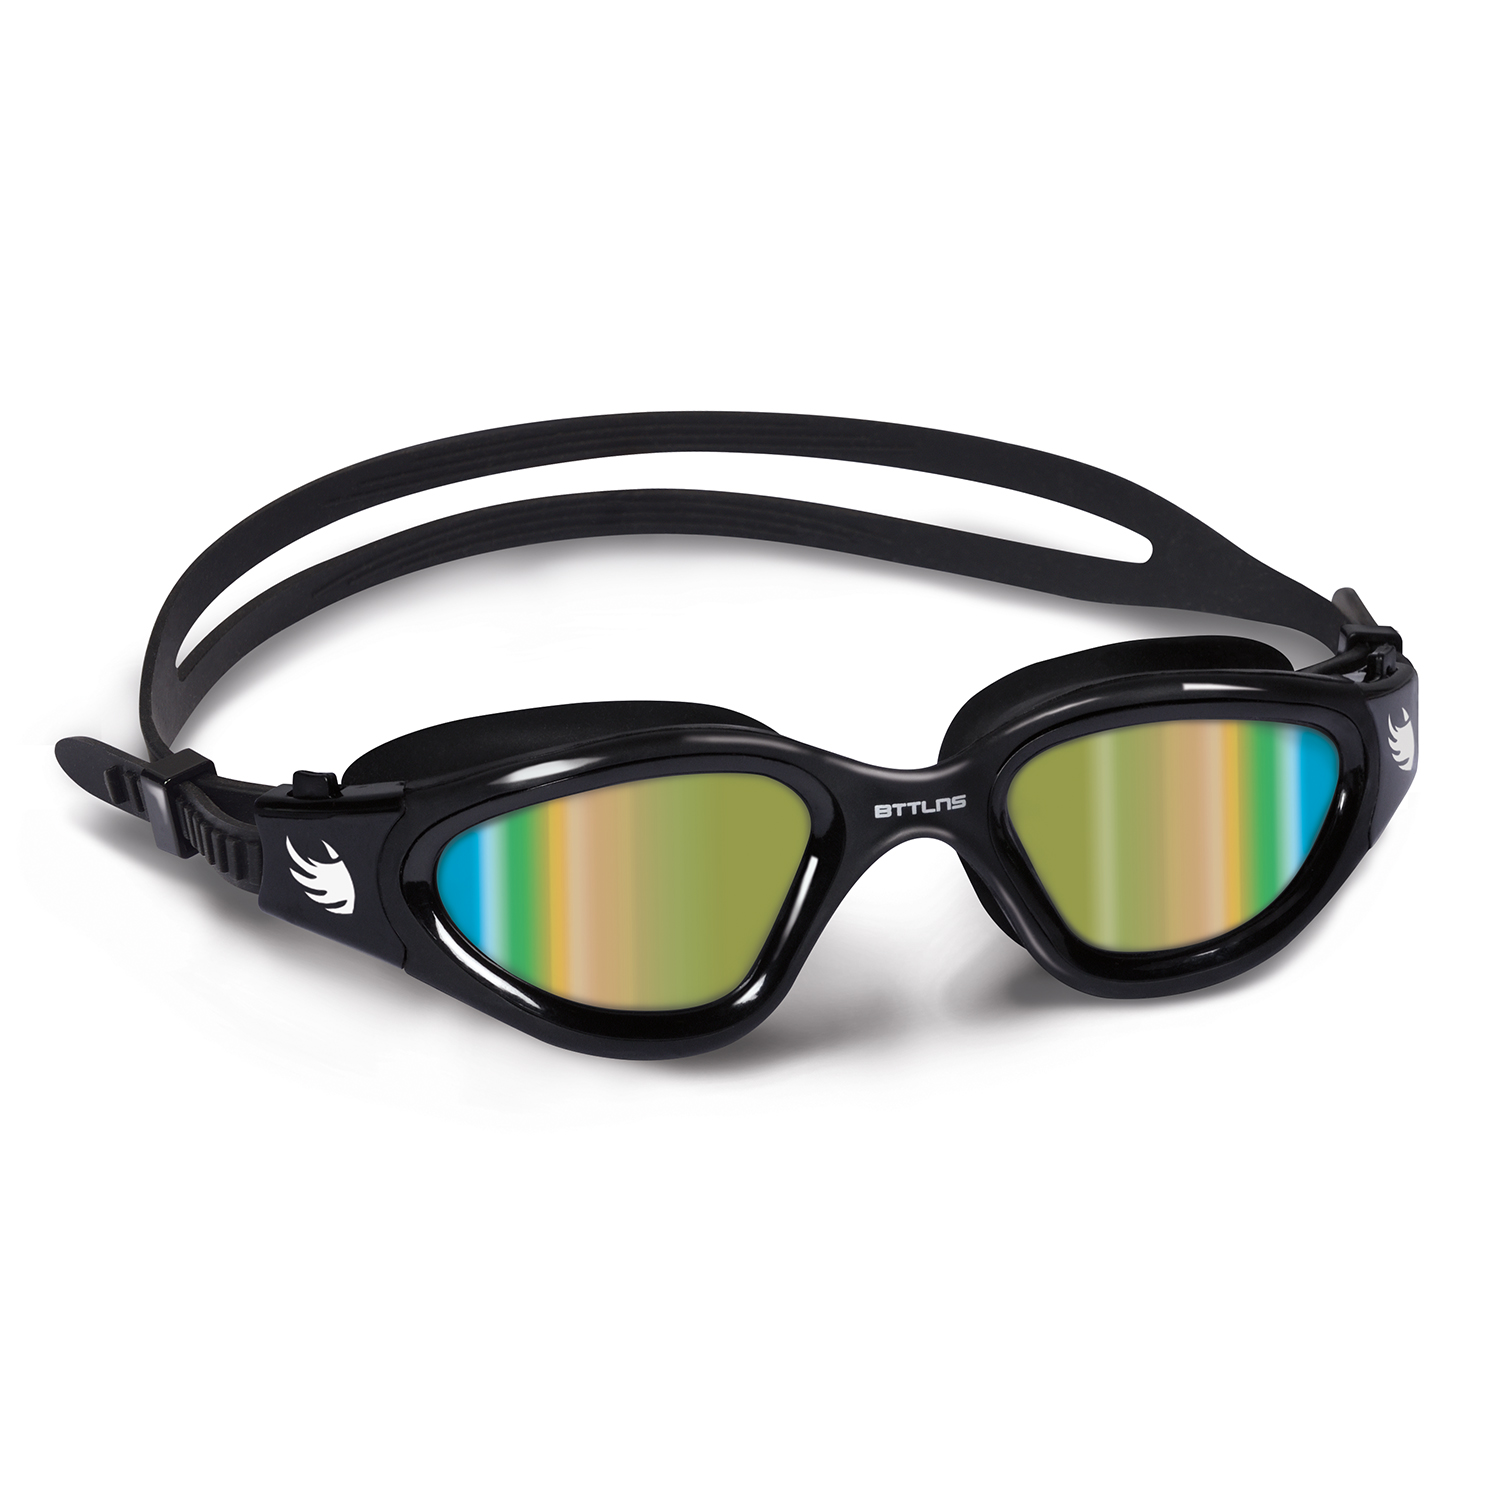 BTTLNS Valryon 1.0 goggle mirror rainbow lenses black/gold  0119002-060